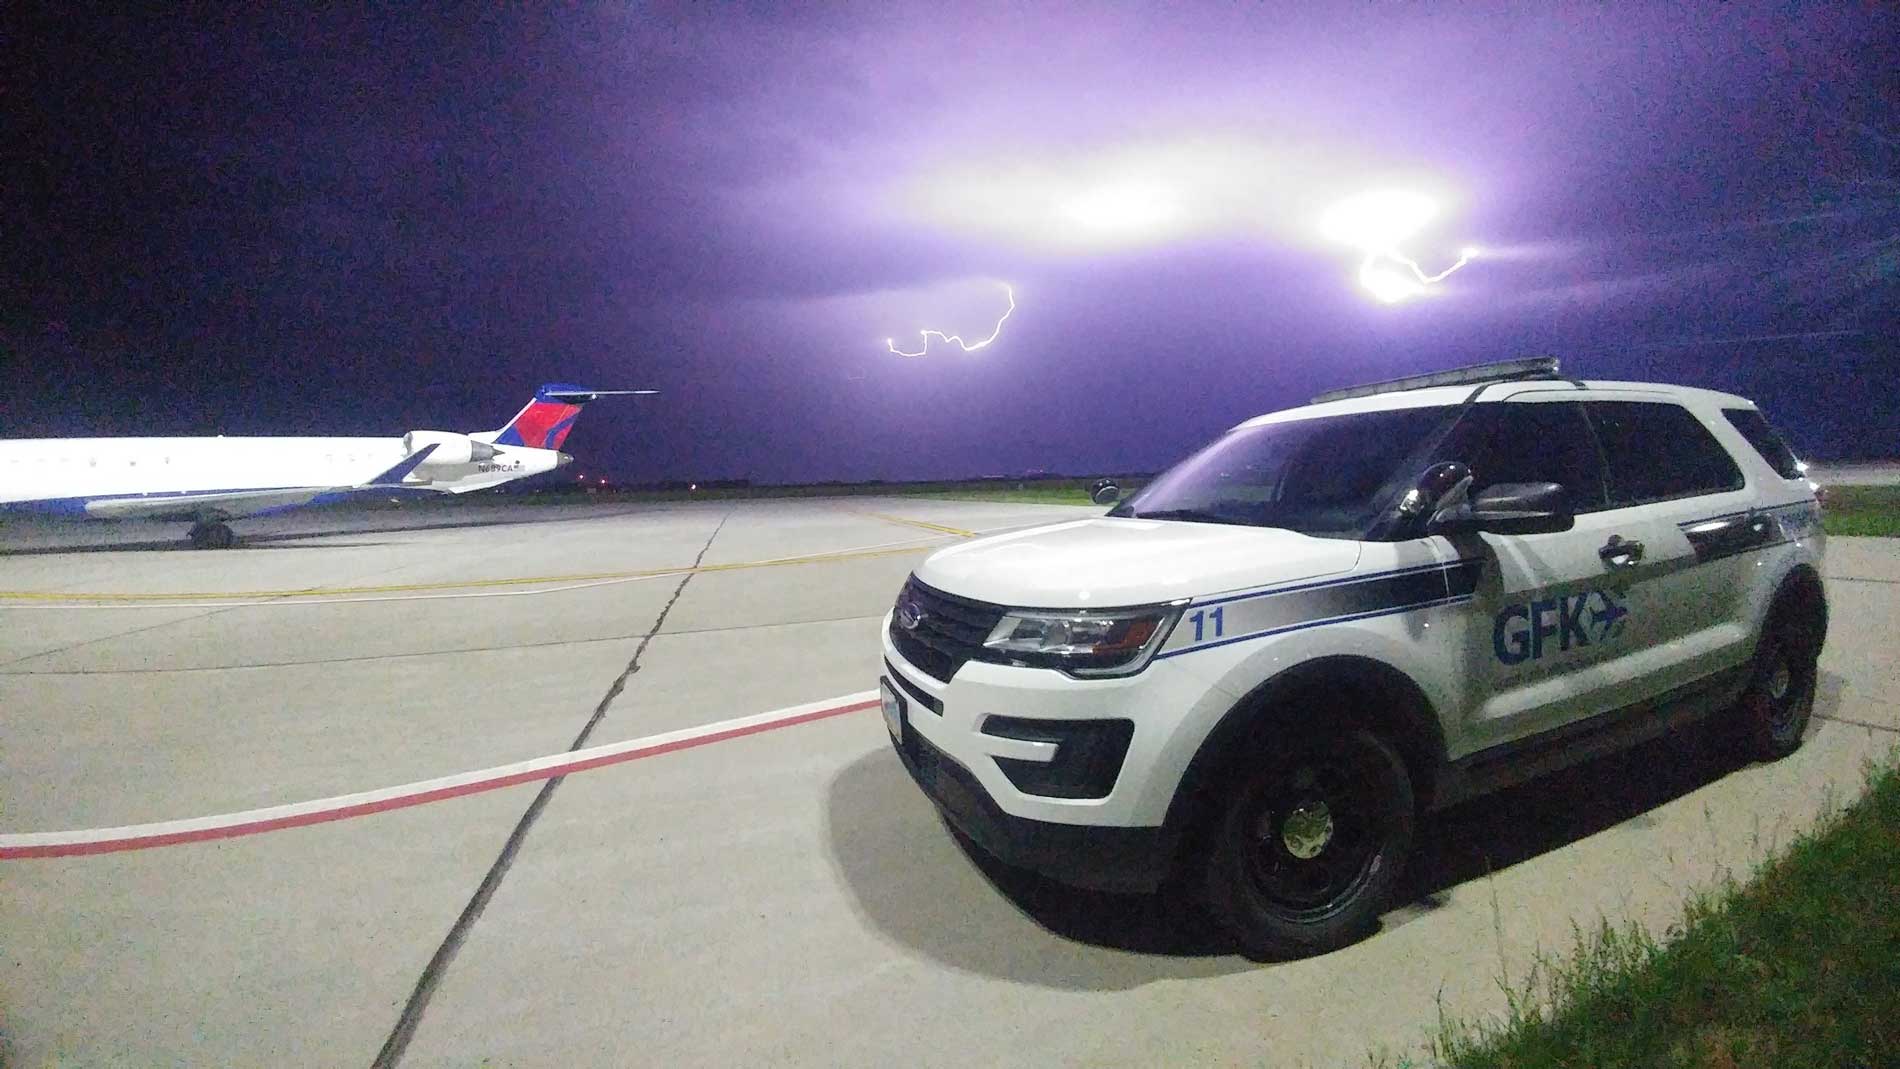 Airport Lightning